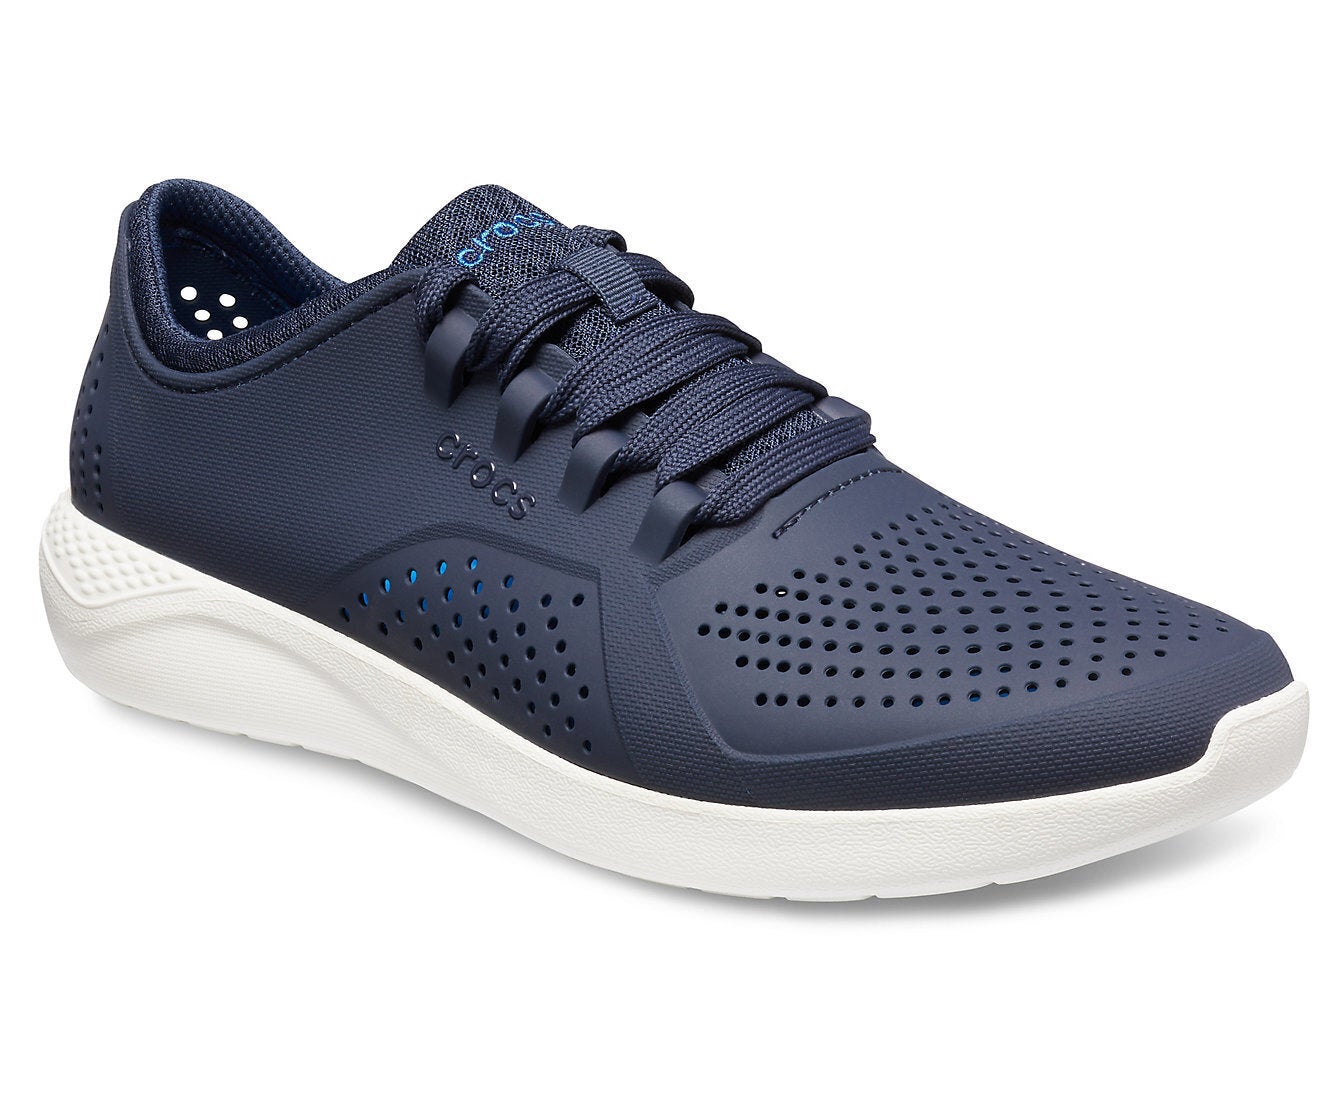 crocs running shoes Online shopping has 